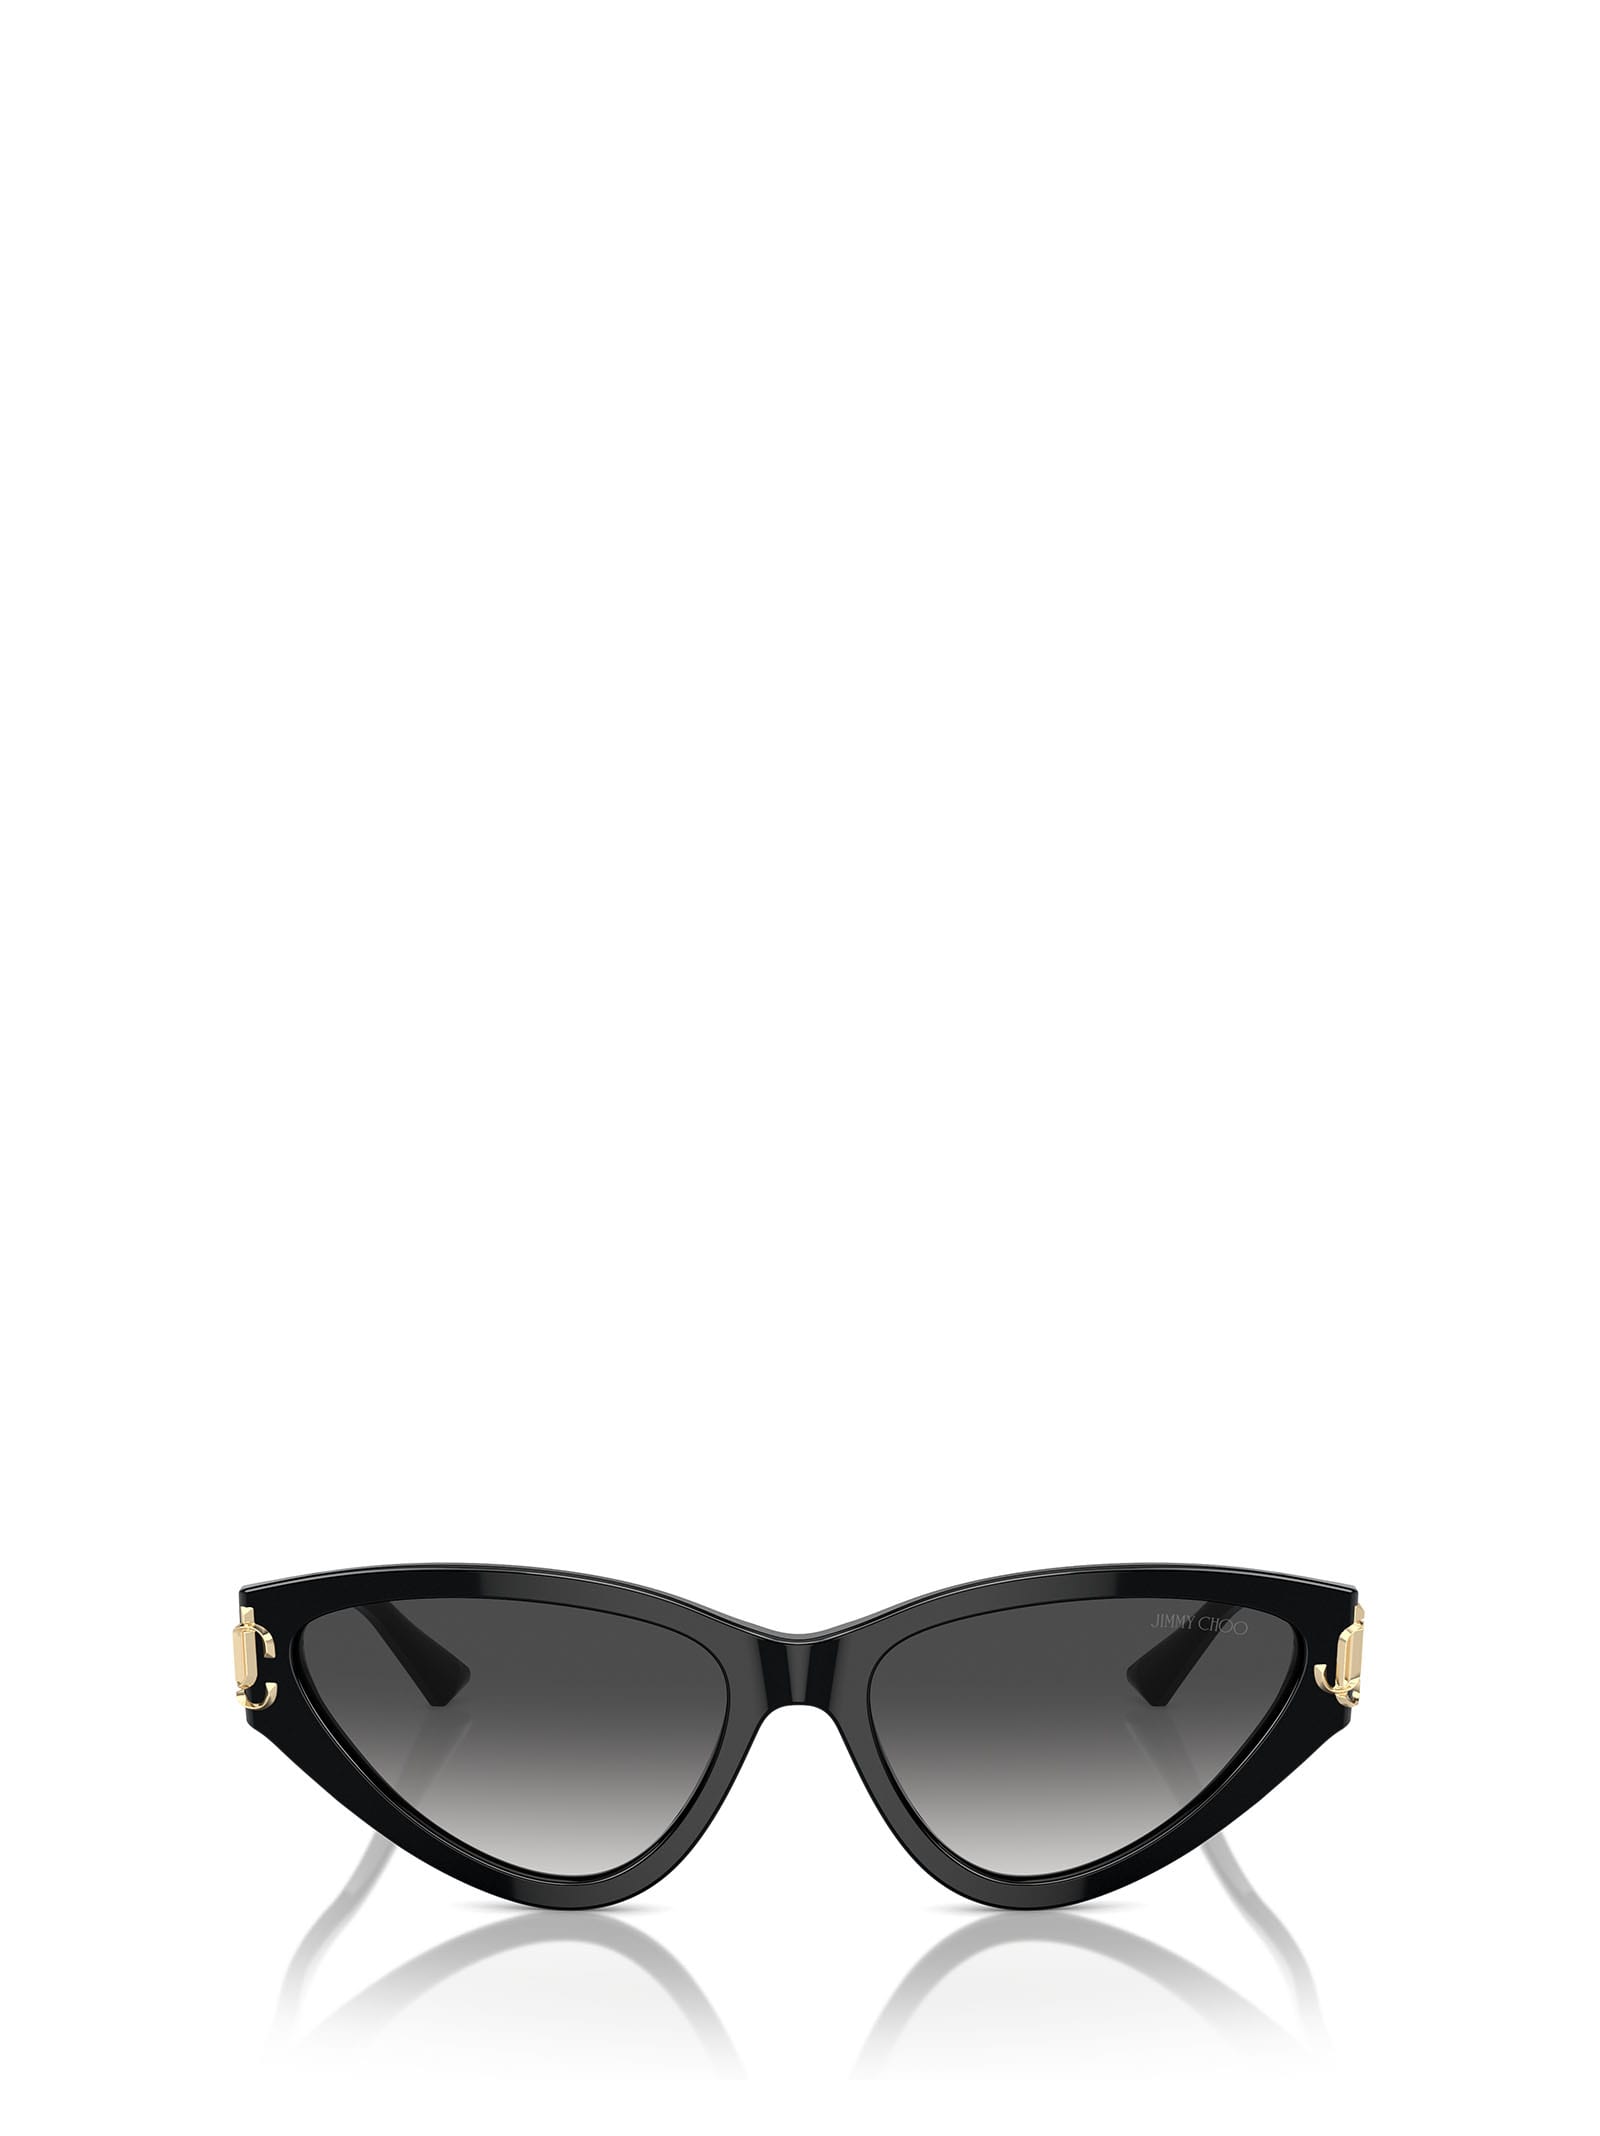 Jc5019 Black Sunglasses